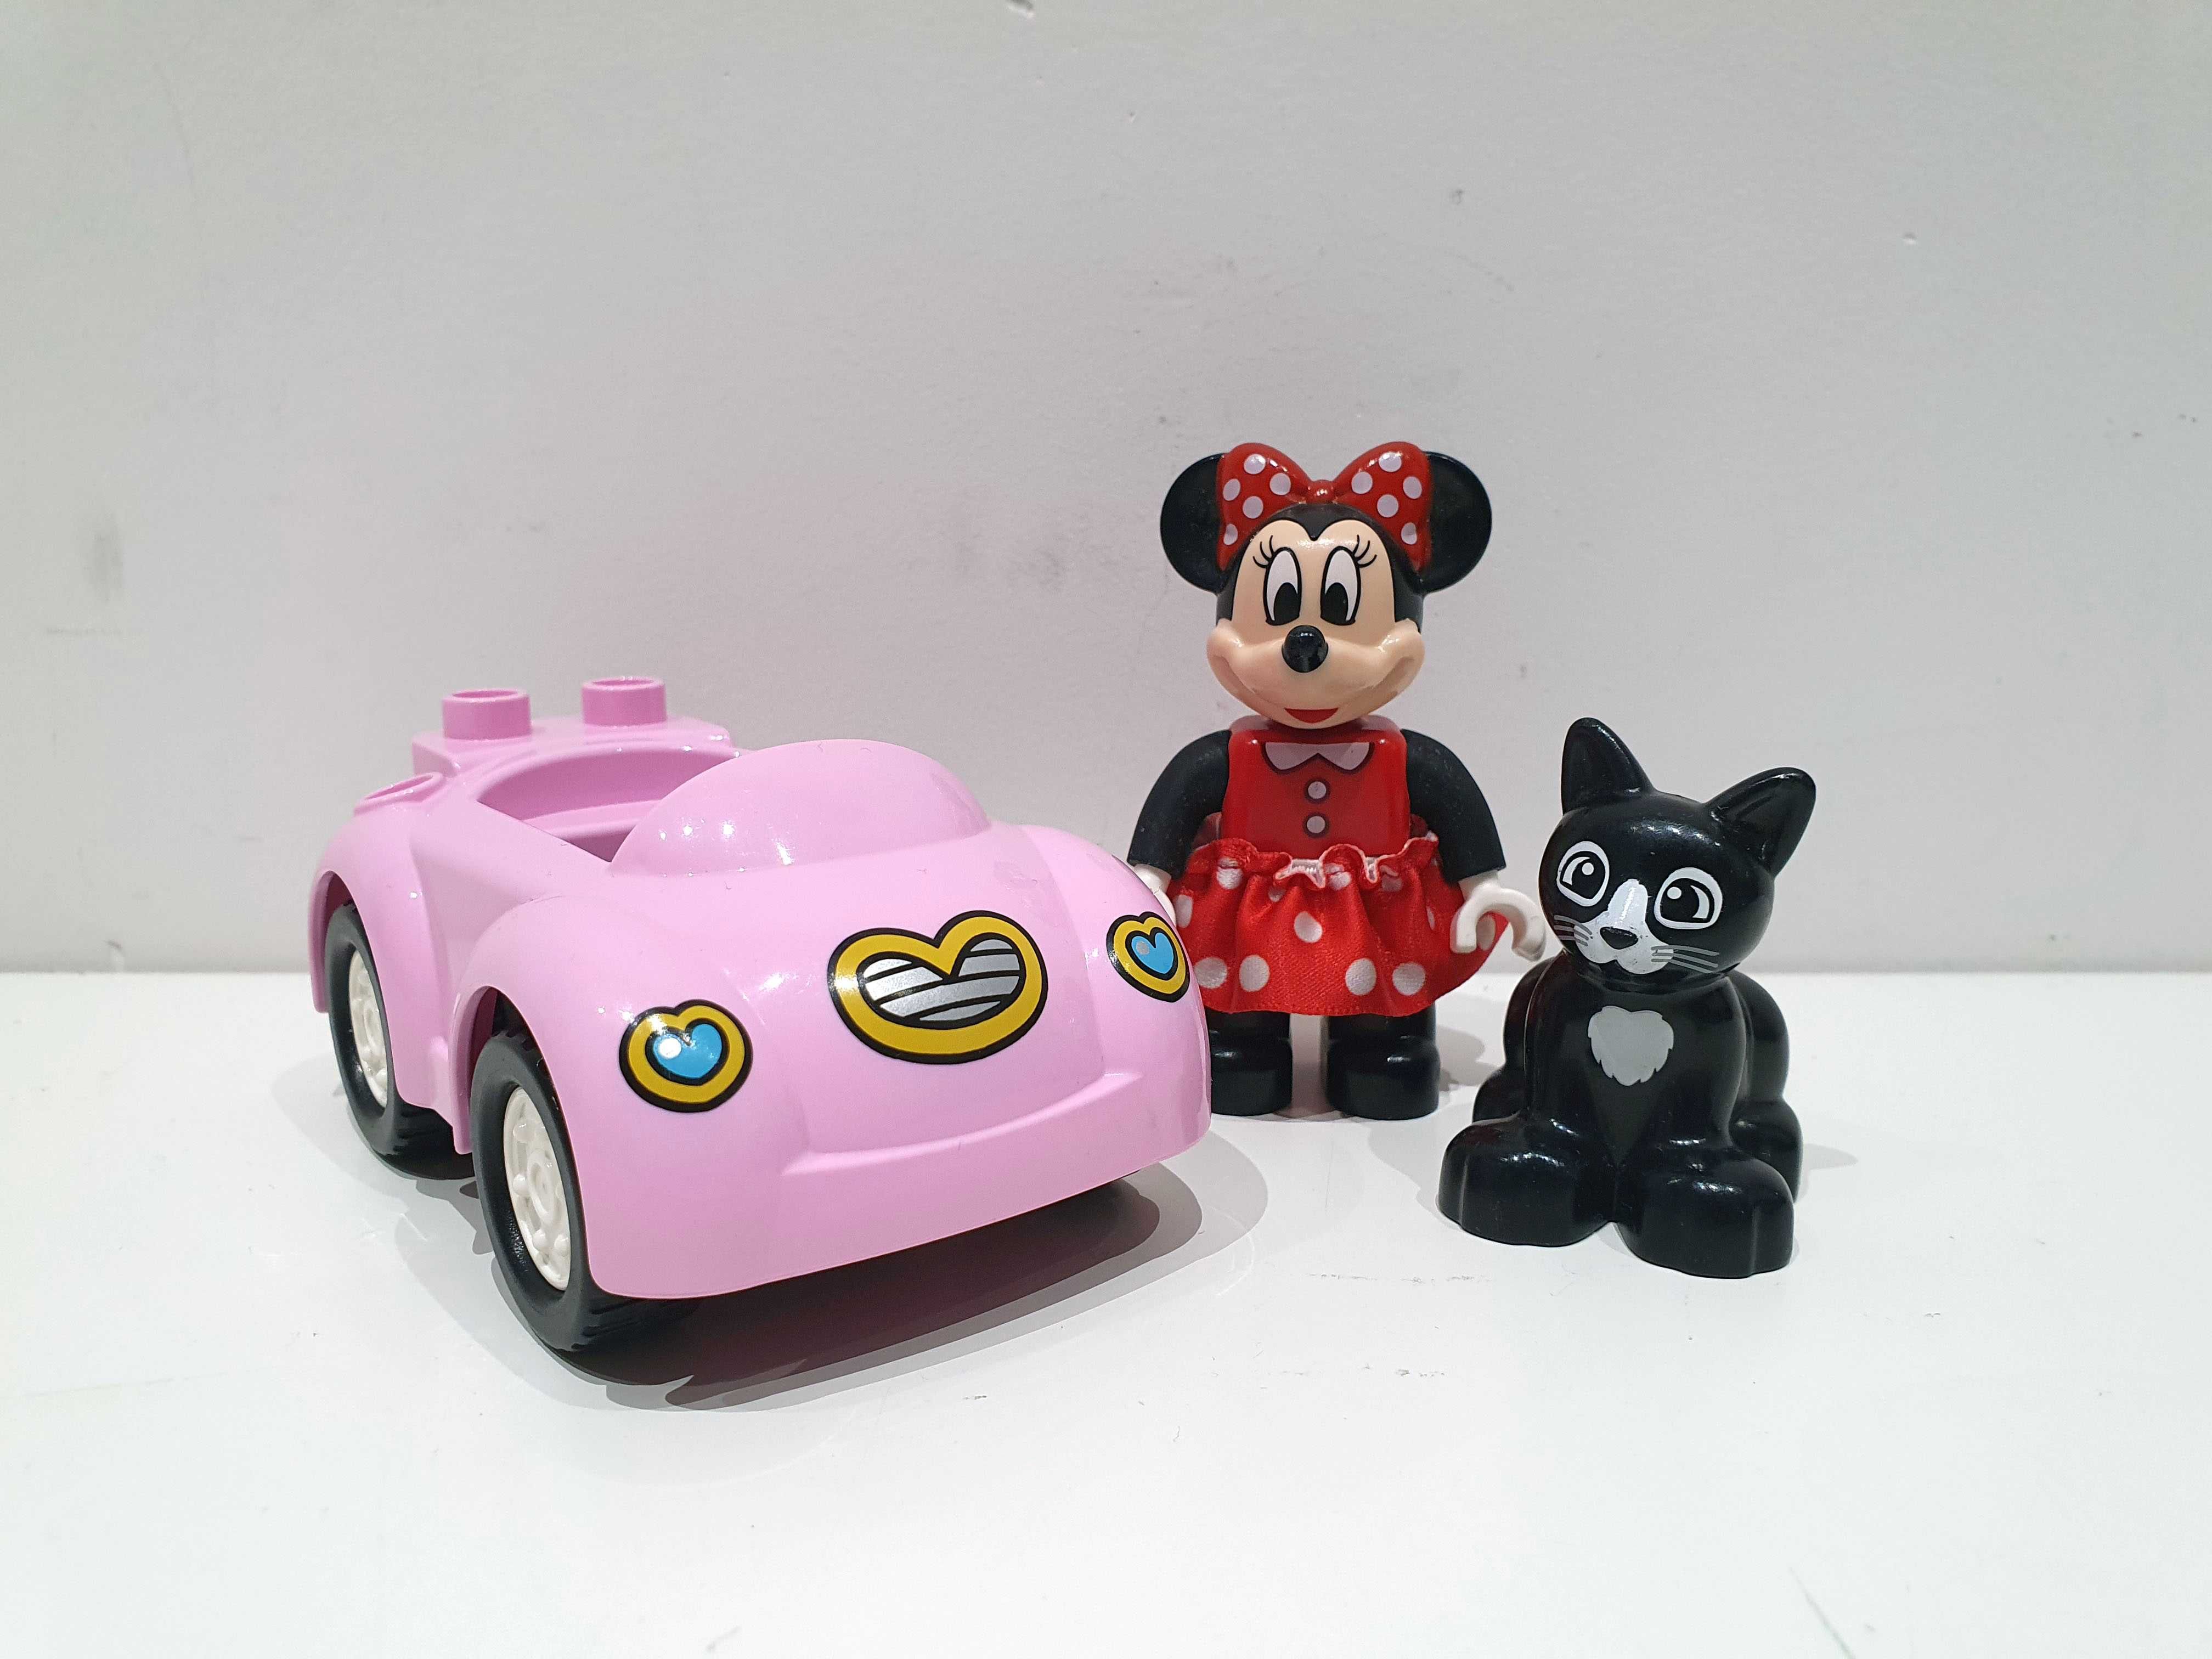 Lego DUPLO 10881 Myszka Minnie 10873 samochód kot Figaro klocki